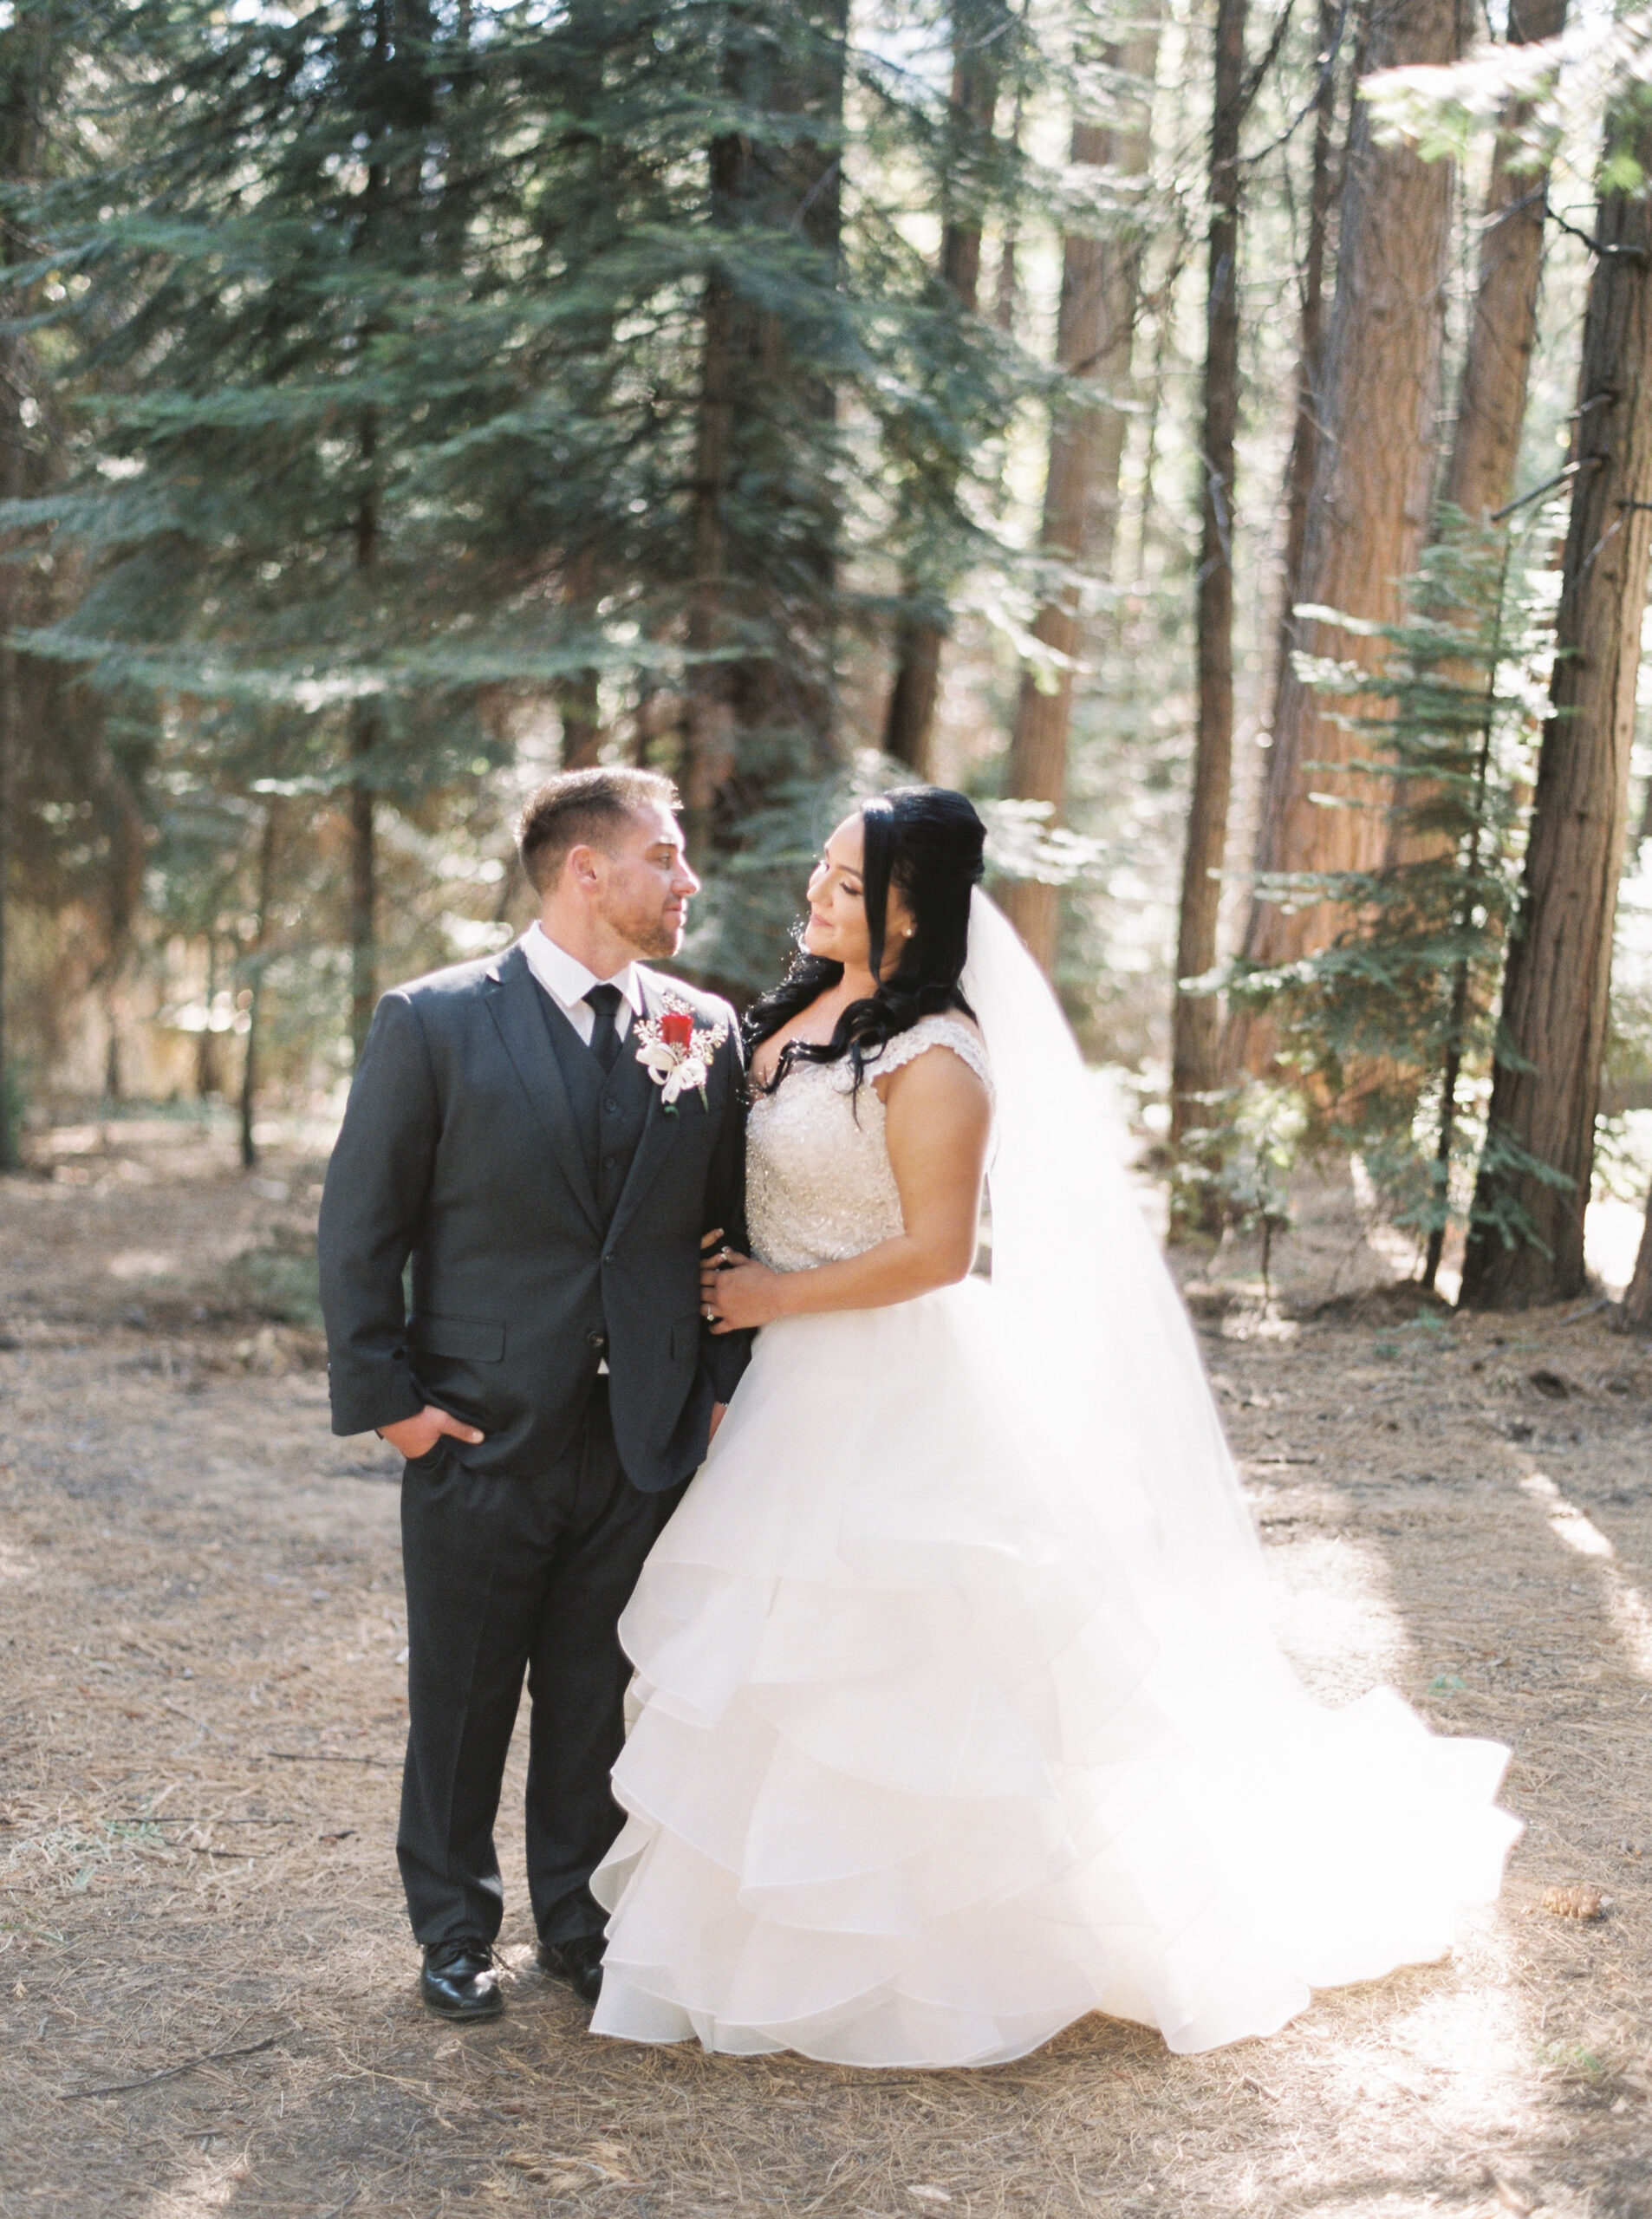 Tenaya-lodge-wedding-at-yosemite-national-park-california-43.jpg